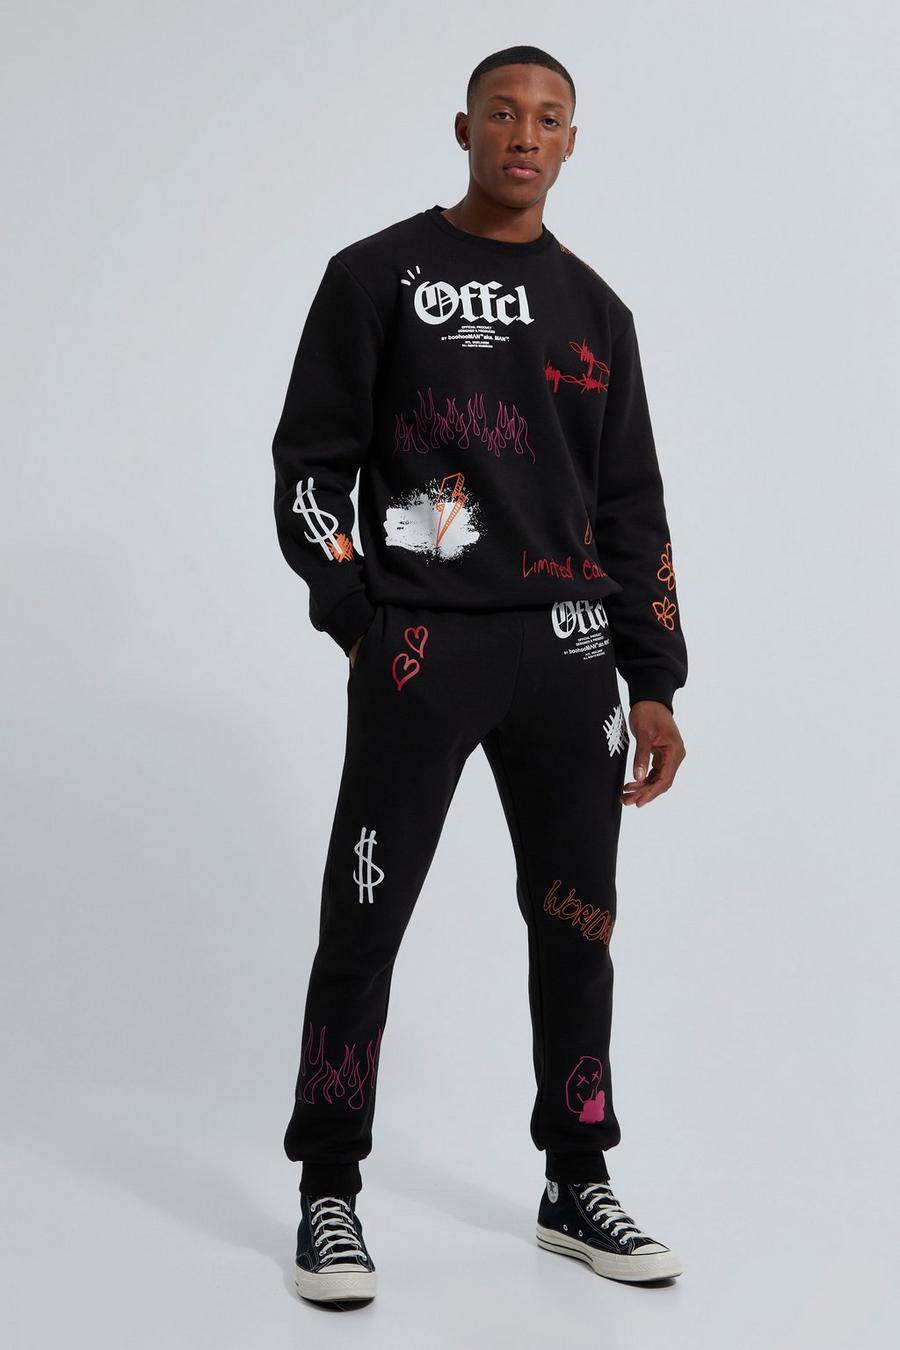 Black svart Offcl Graffiti Sweater Tracksuit